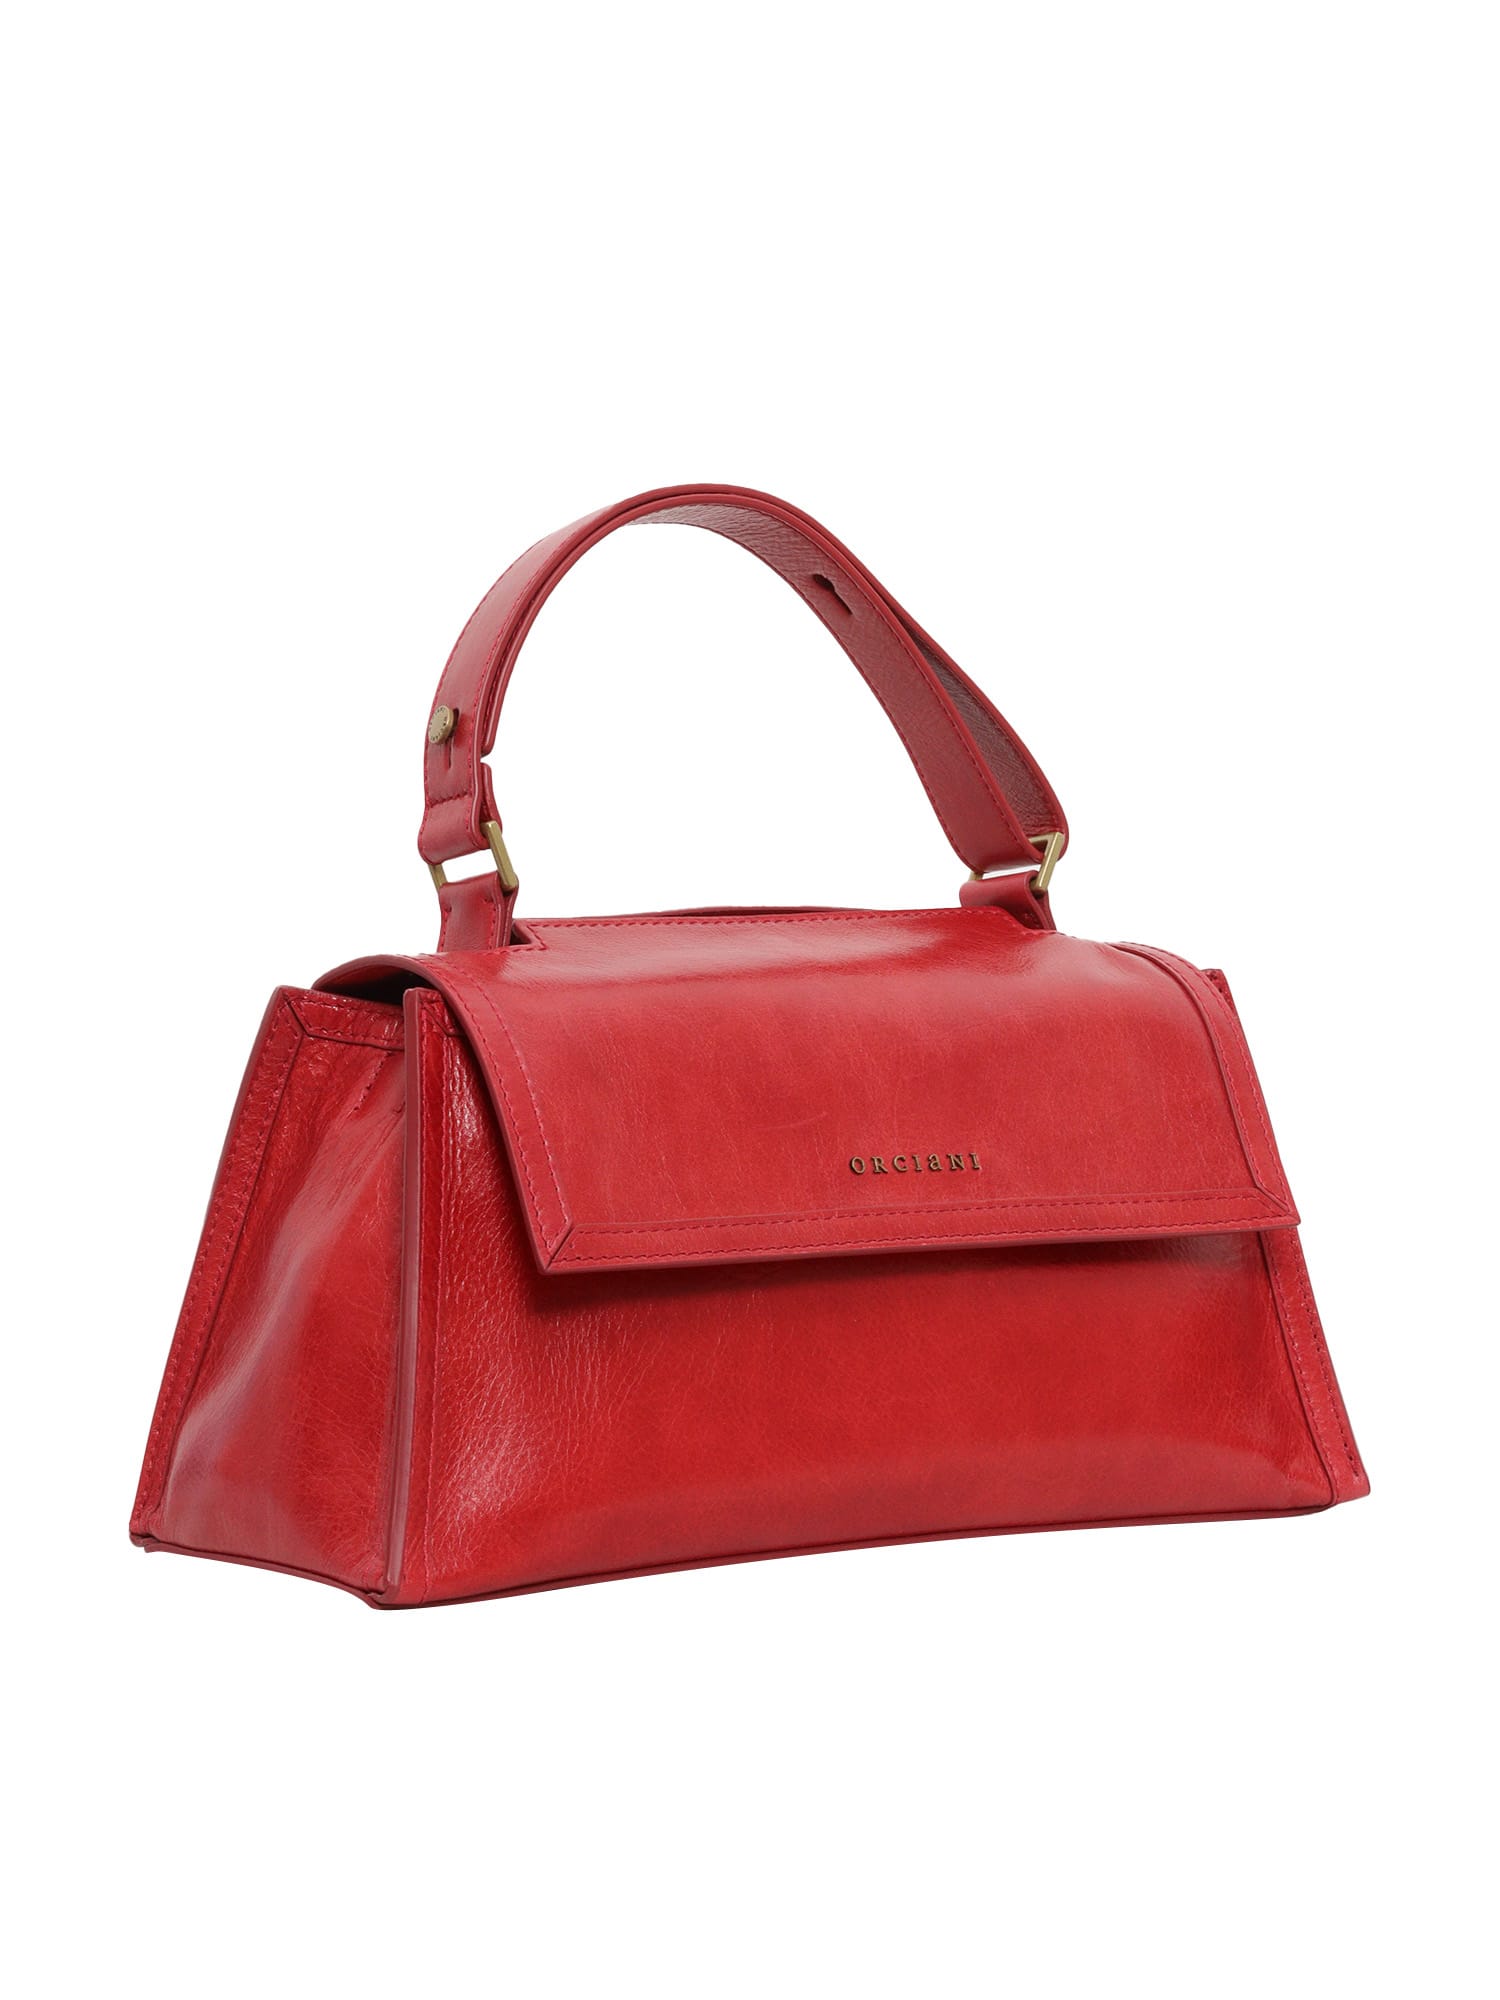 Shop Orciani Red Handbag